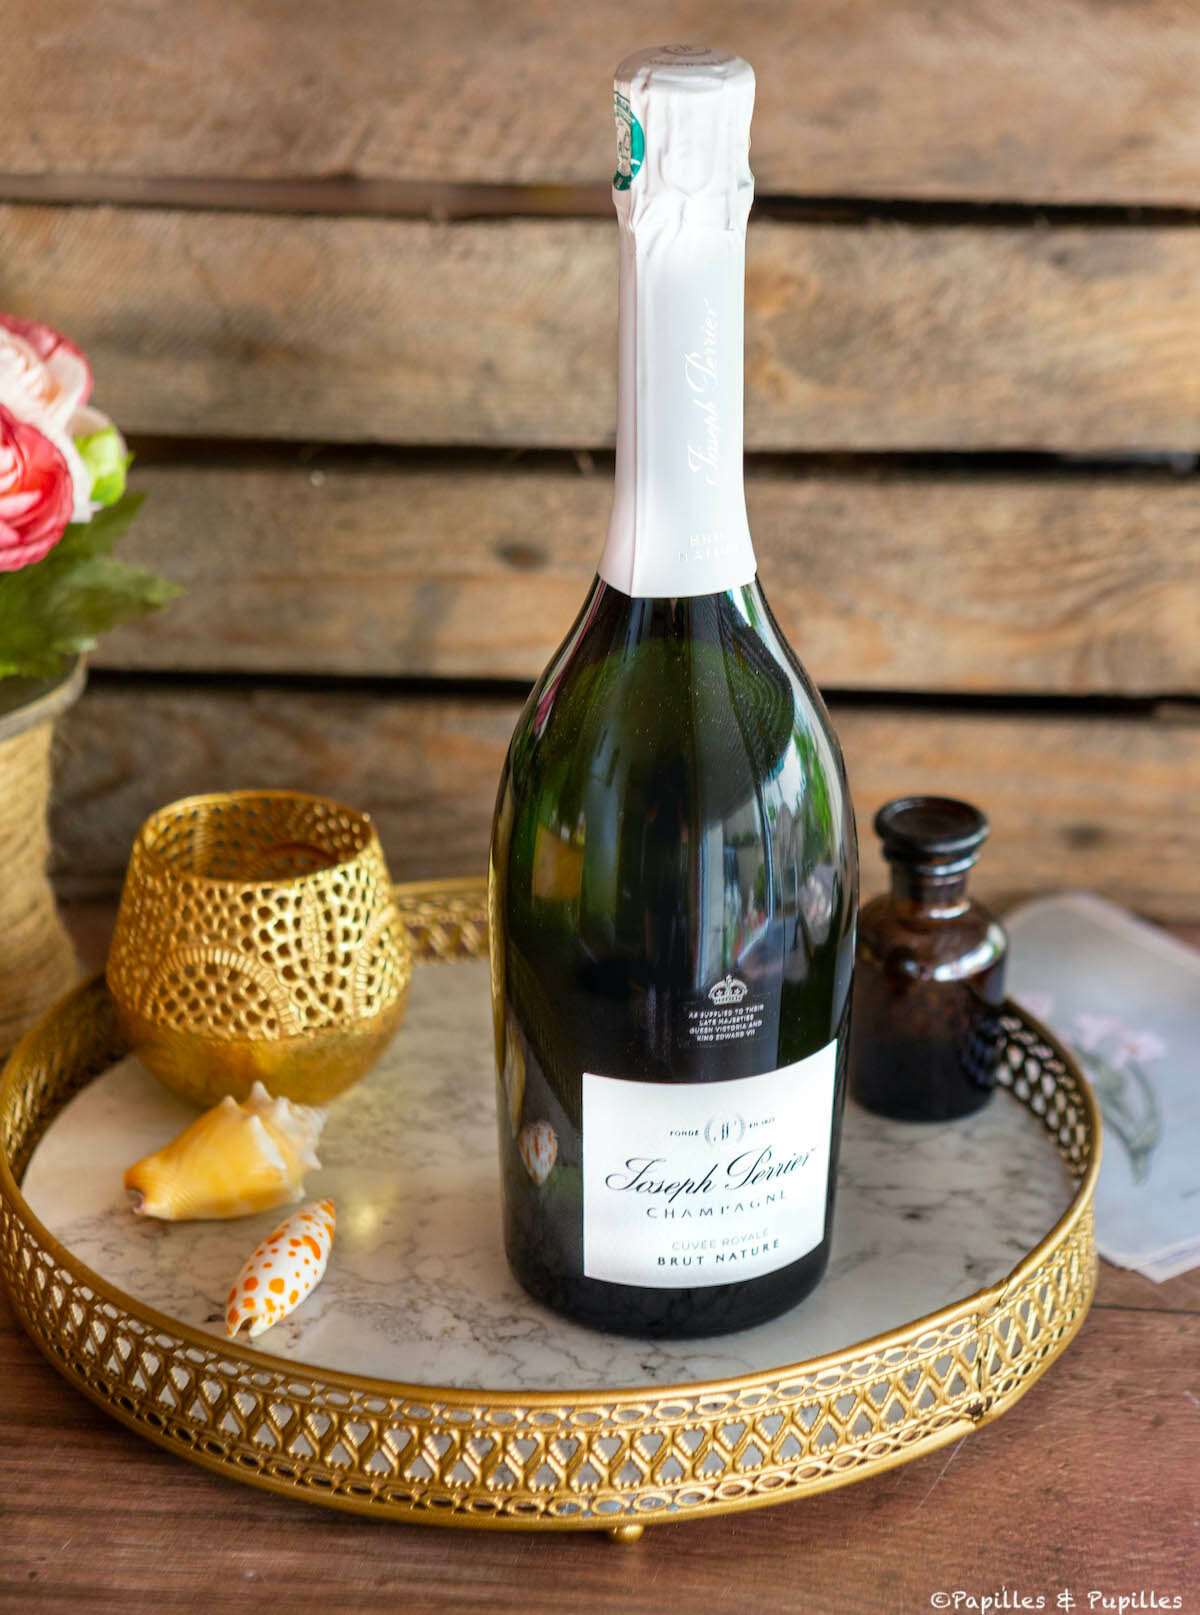 Champagne Joseph Perrier - Cuvée Brut Nature